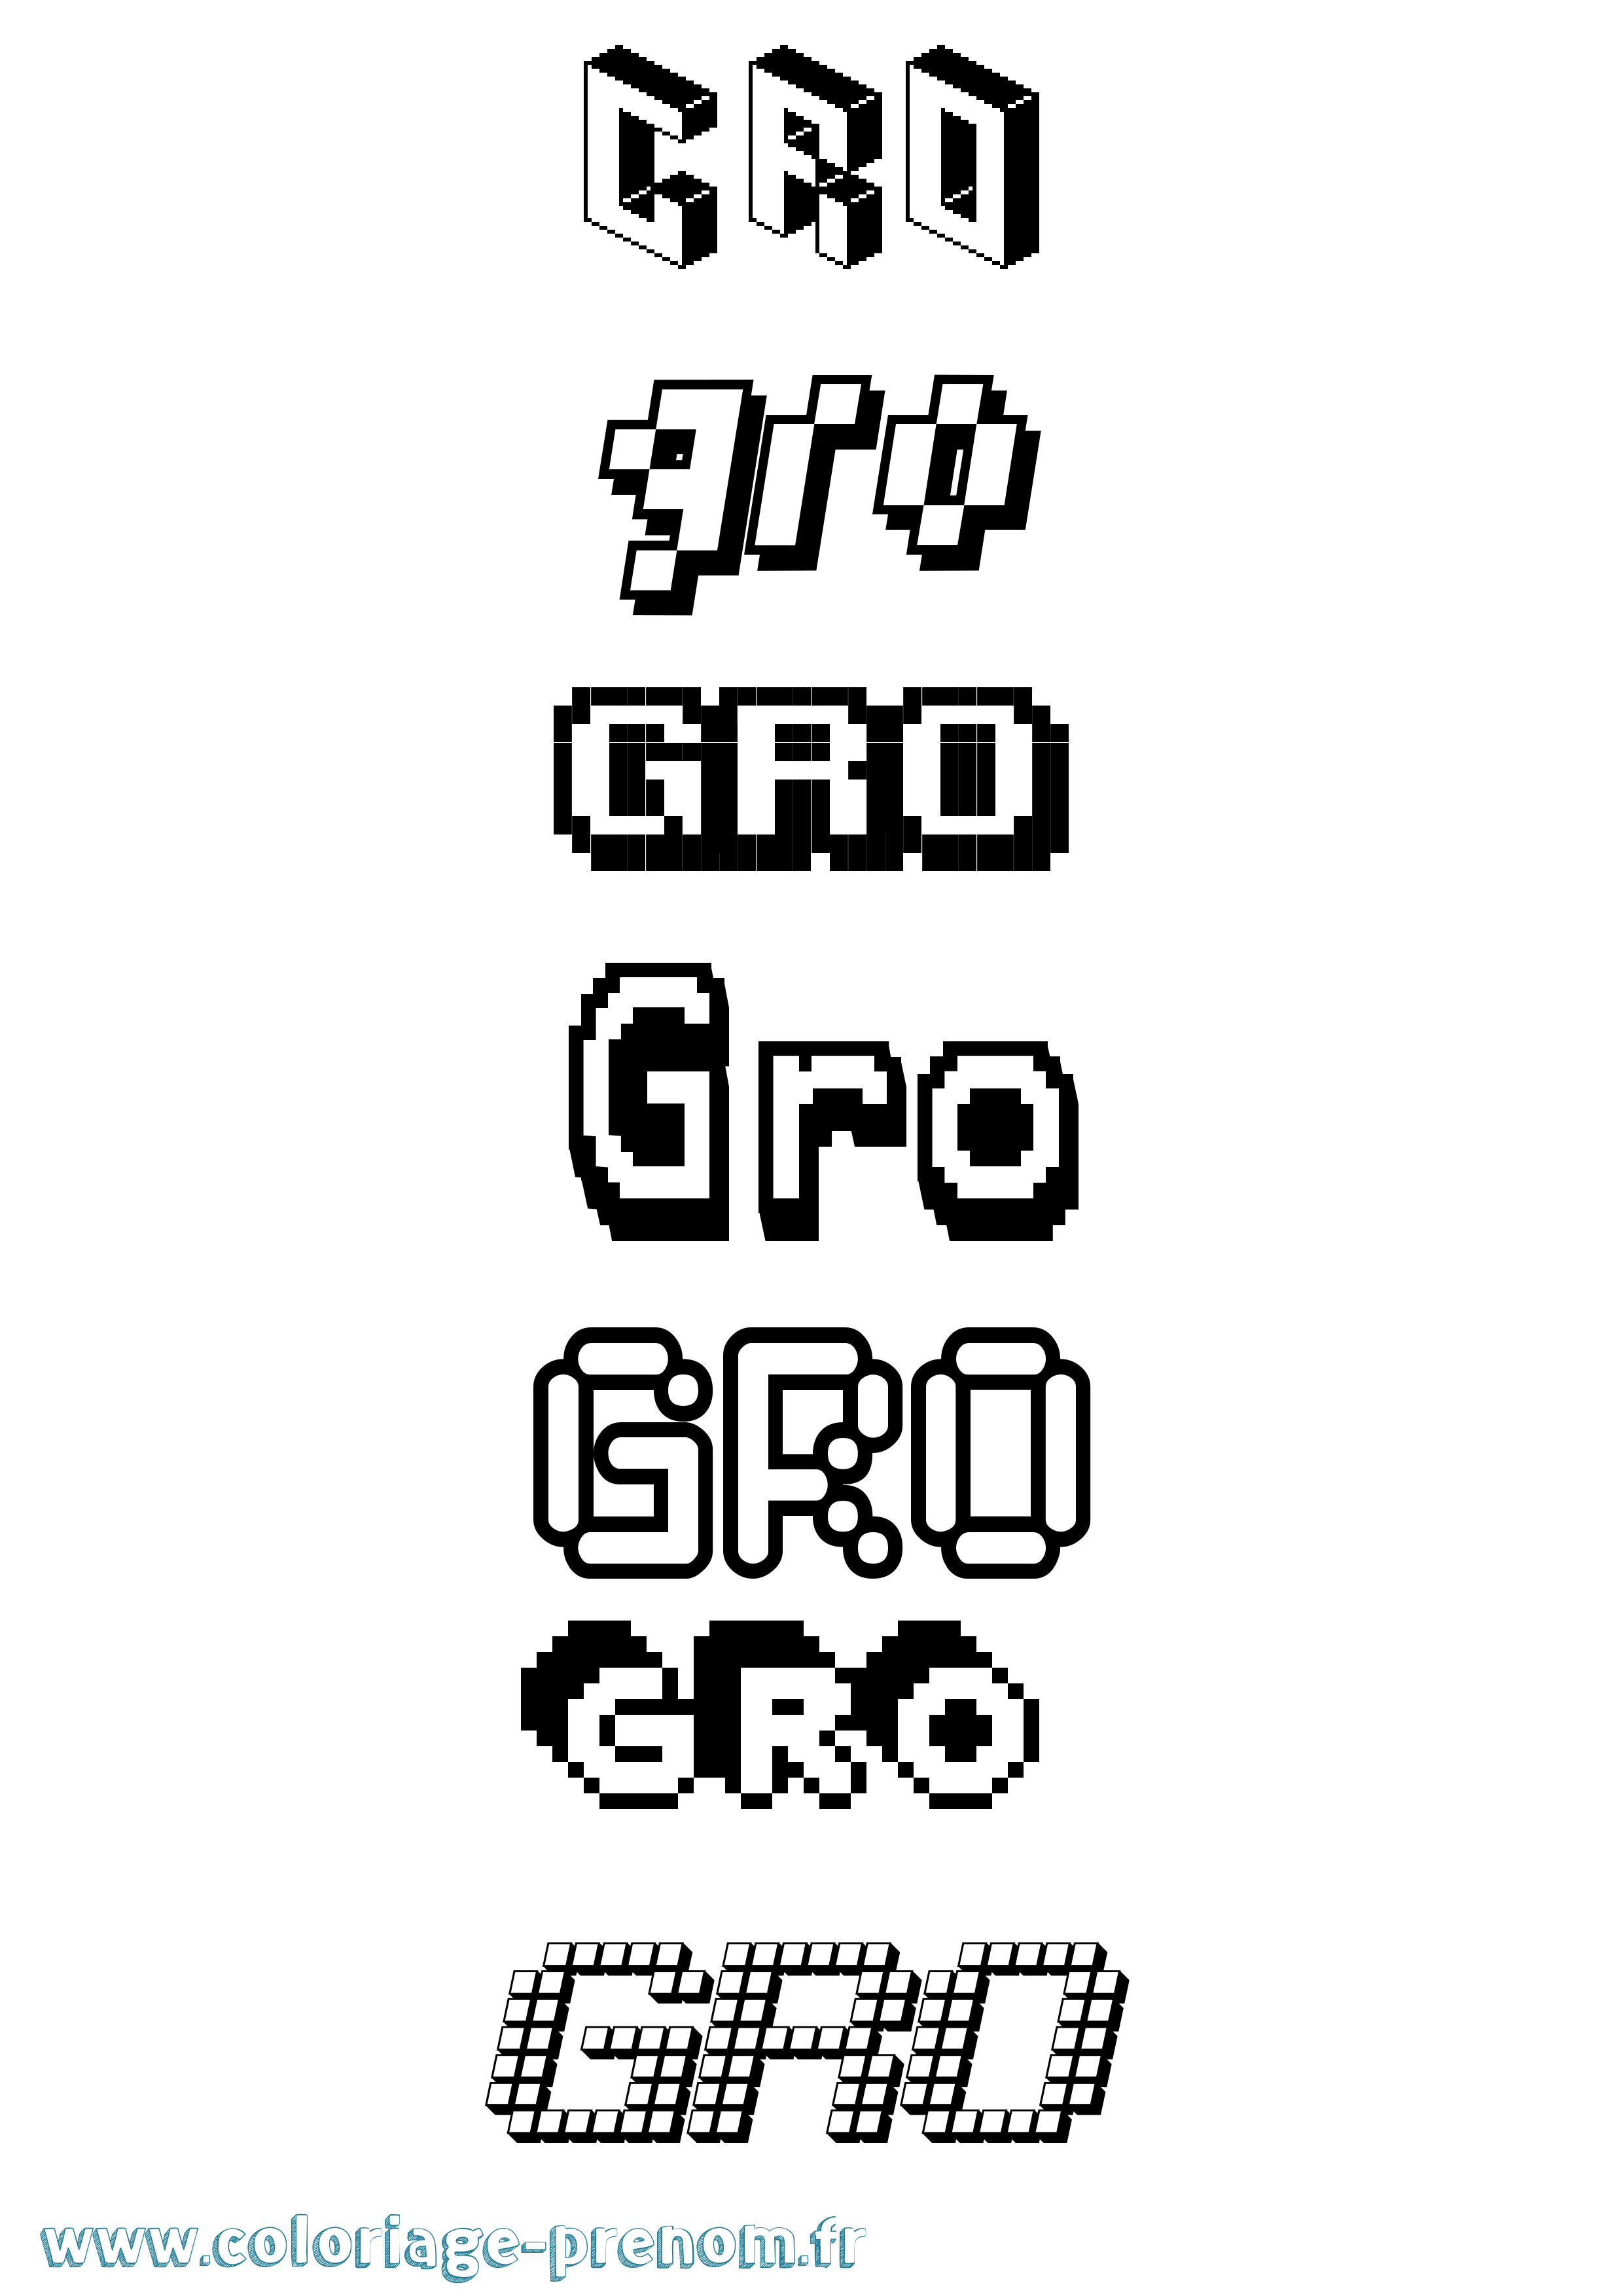 Coloriage prénom Gro Pixel